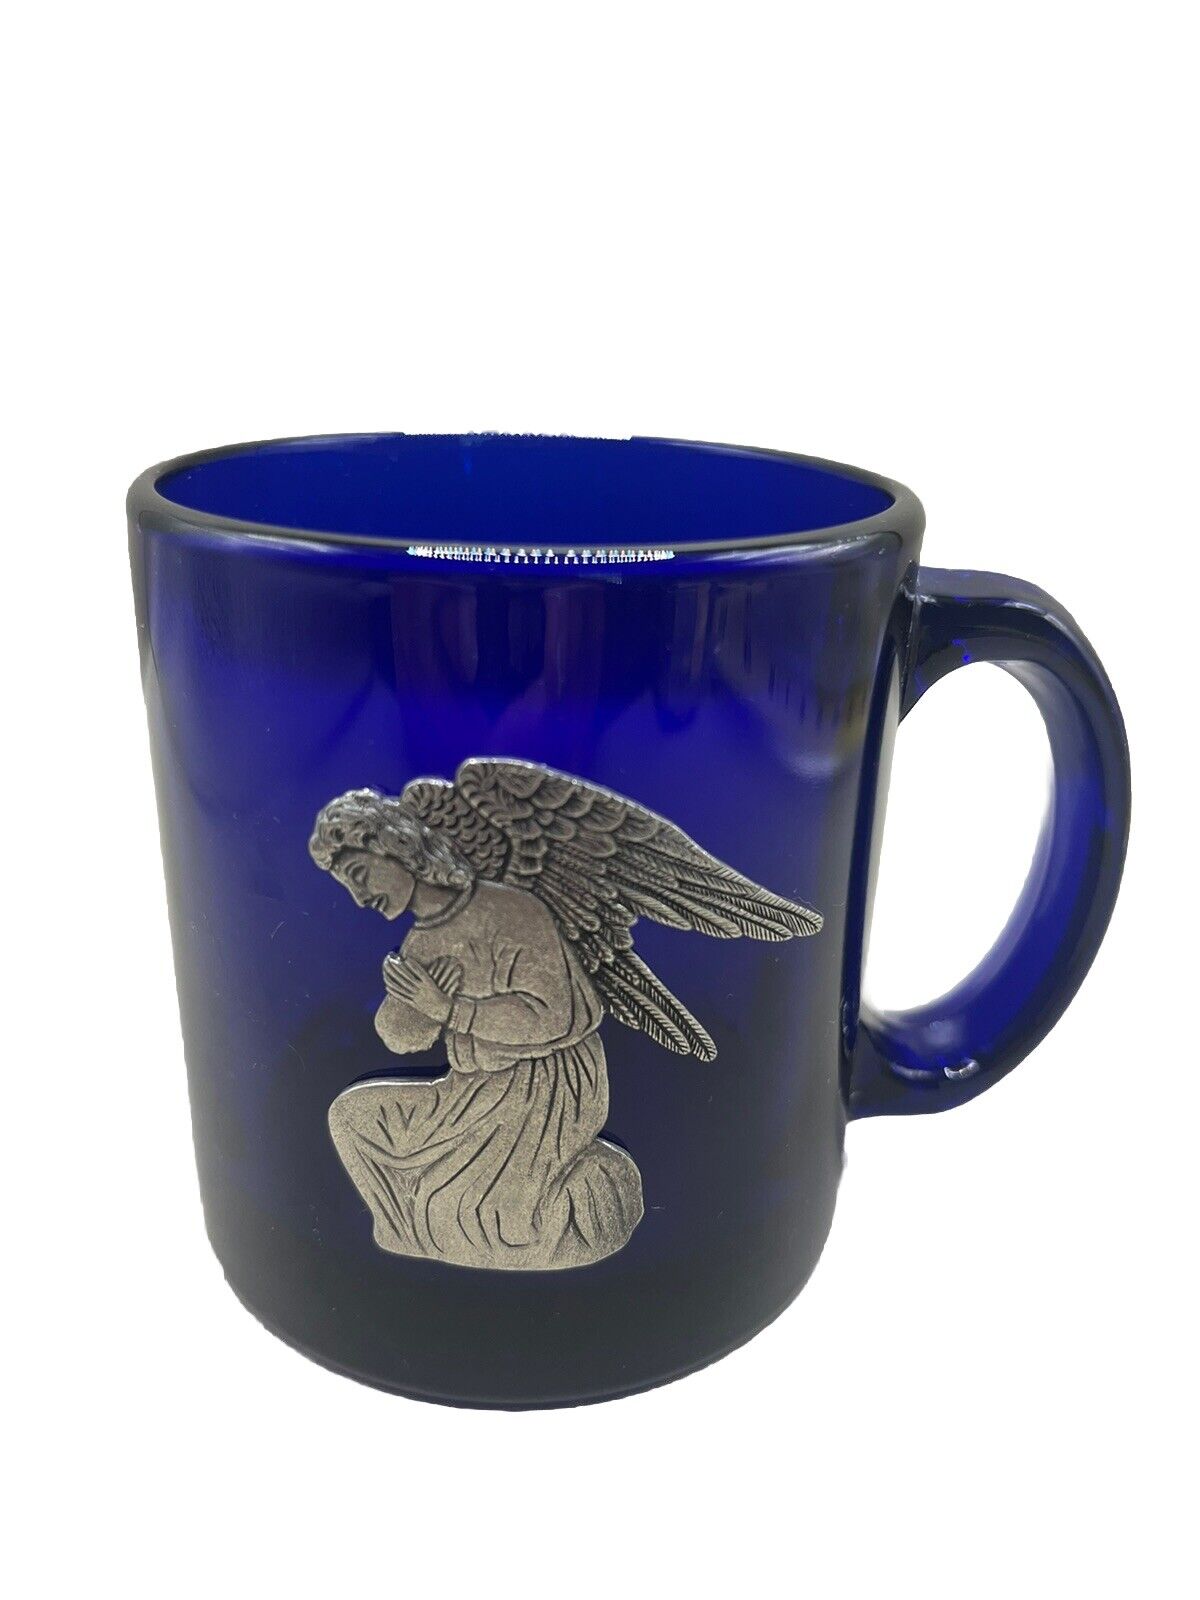 Cobalt Blue Glass Mug With Kneeling Pewter Angel Made In USA